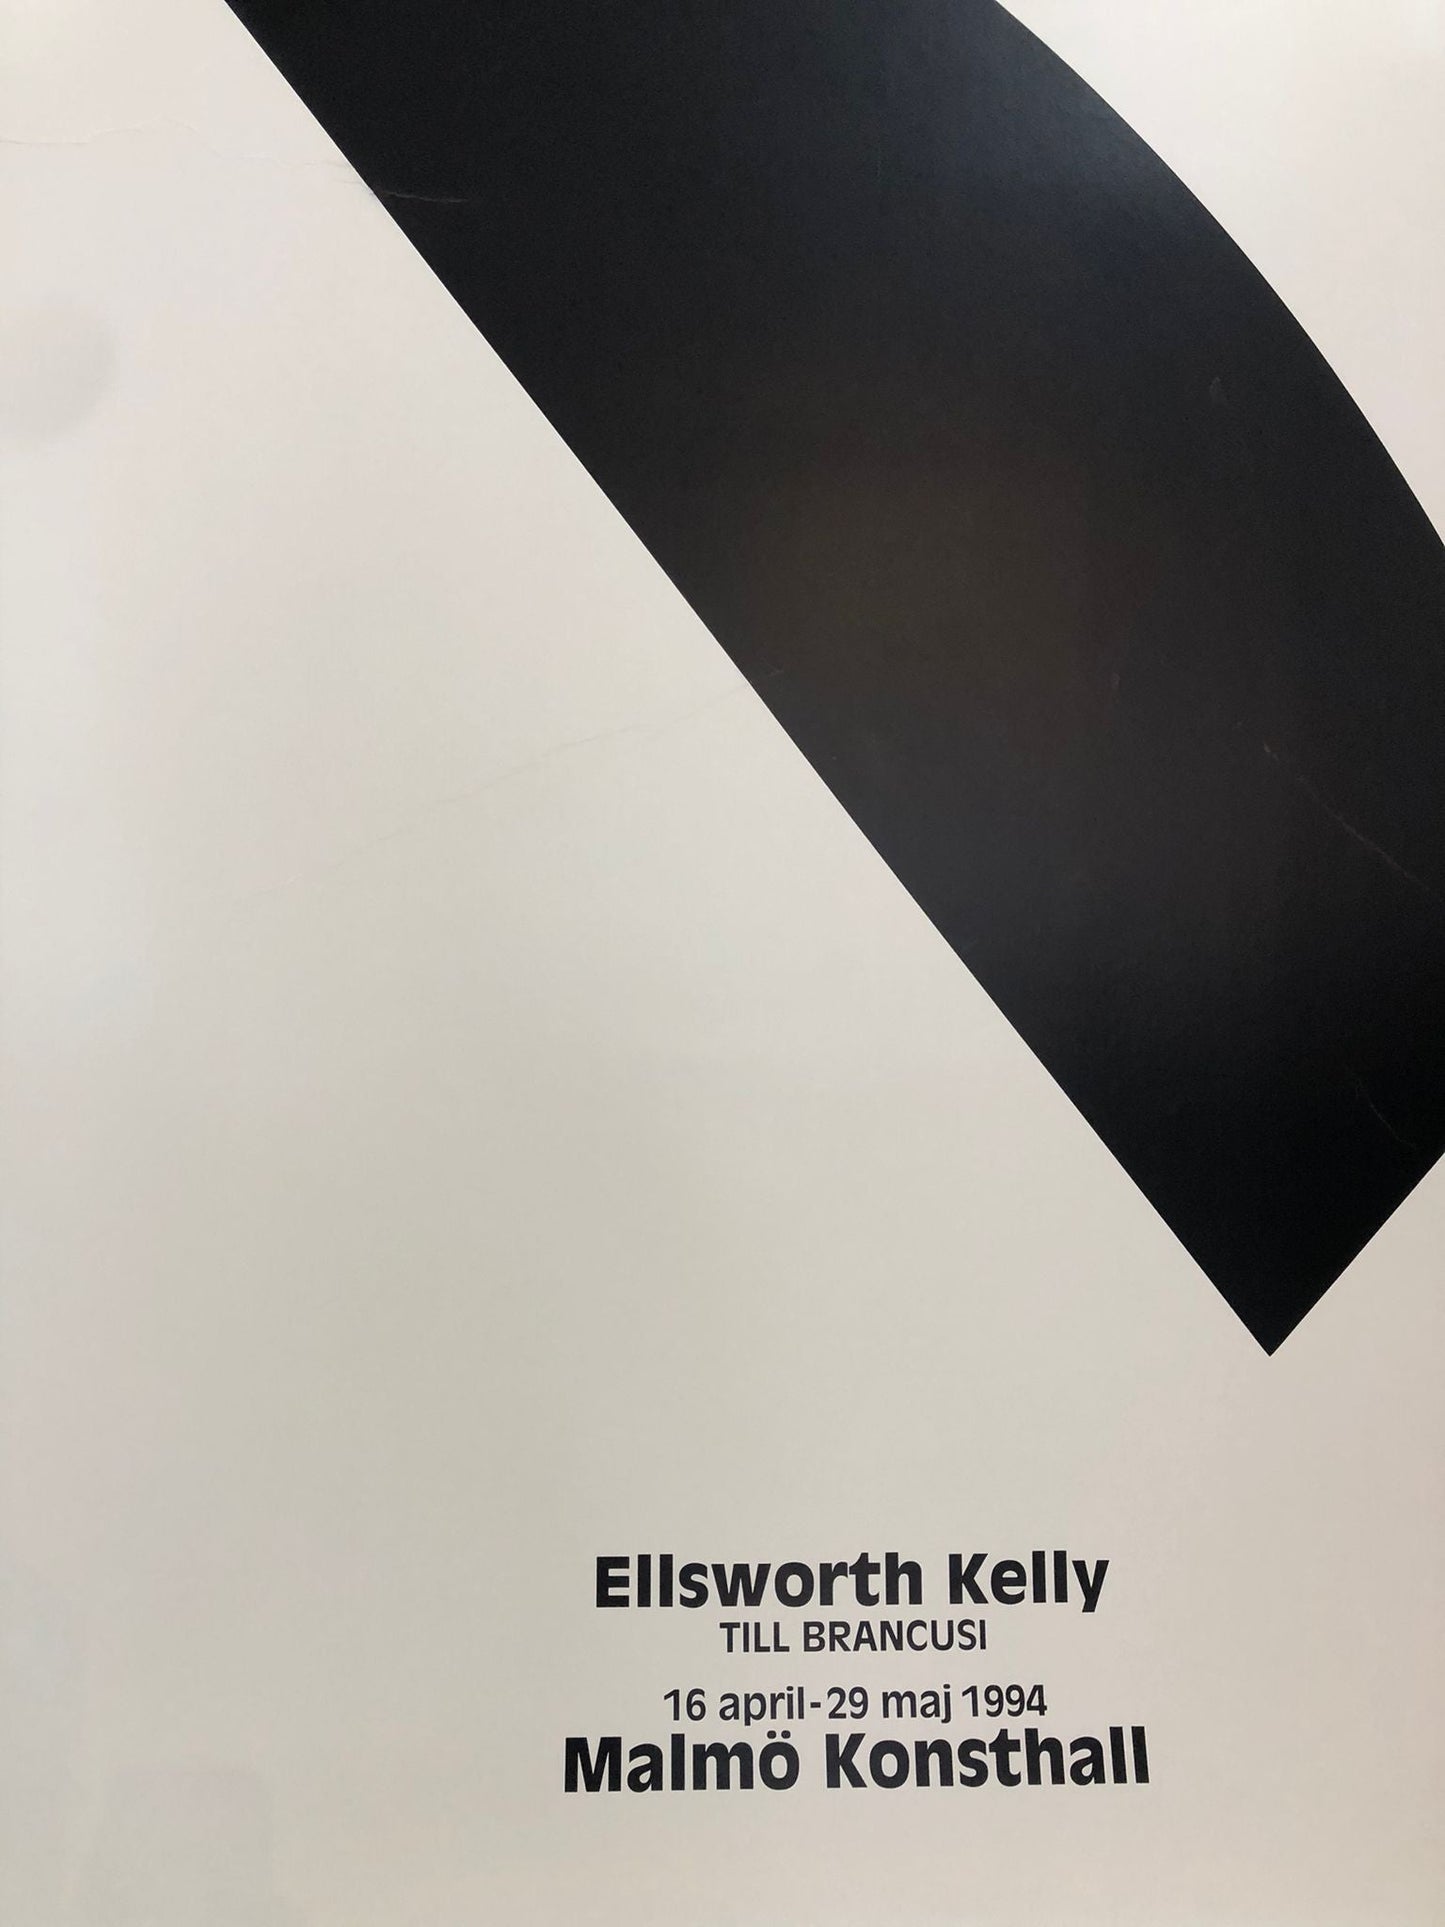 Ellsworth Kelly Exhibition Poster